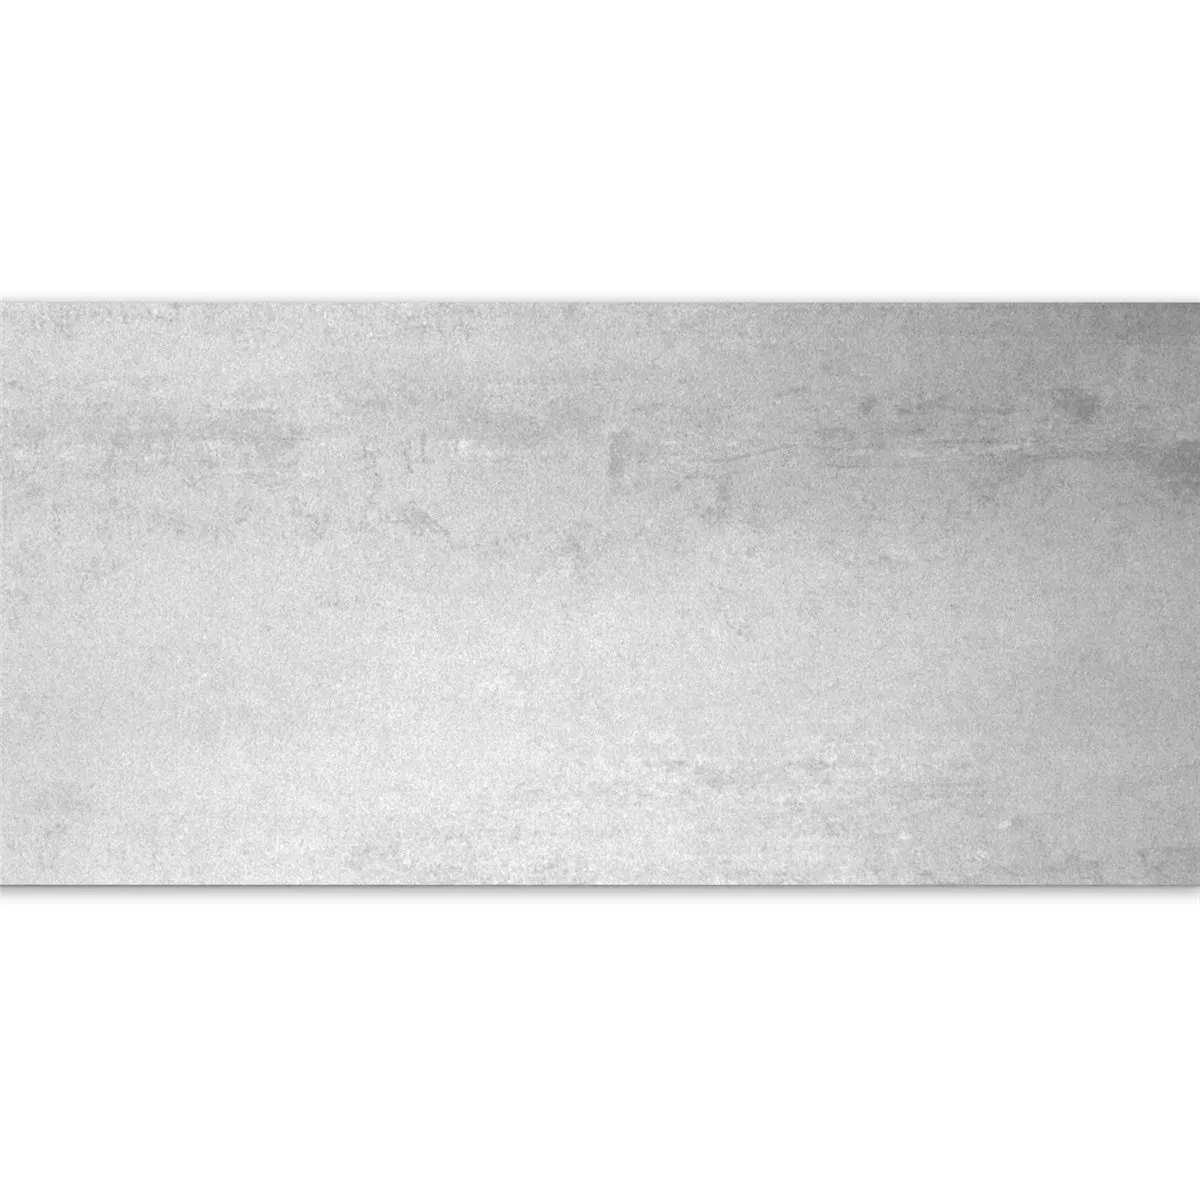 Vzorek Podlahové Dlaždice Madeira Naleštěná Bílá 30x60cm